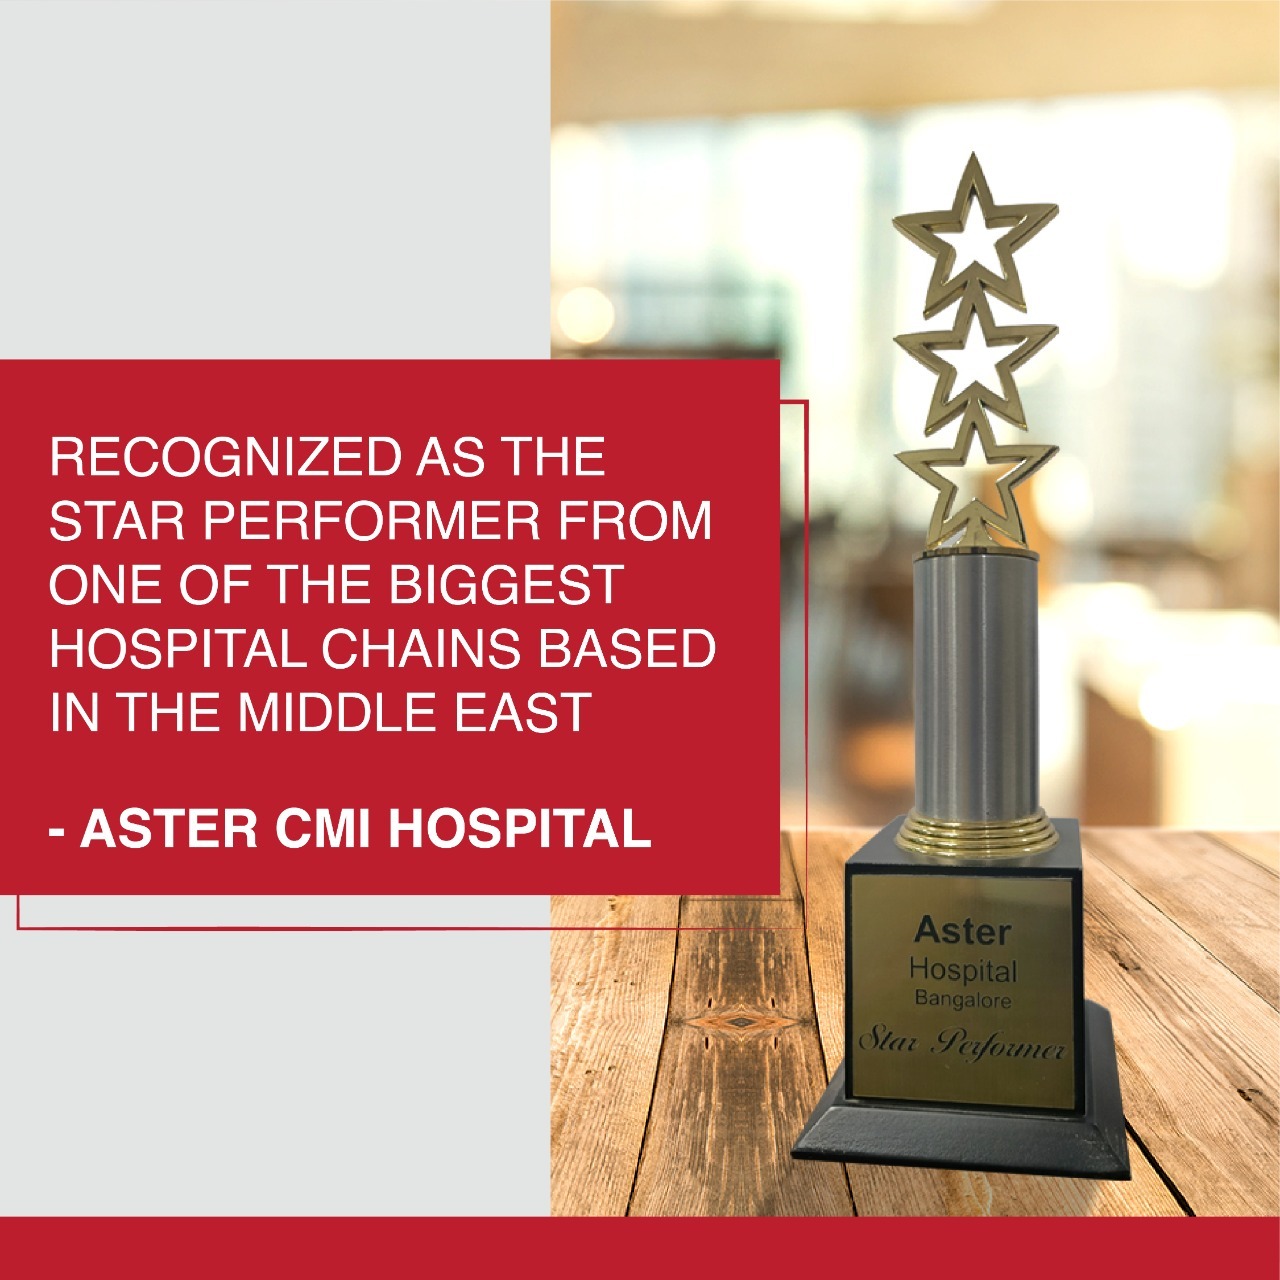 Aster-CMI-Hospital-Award-ABS-Fujitsu-General